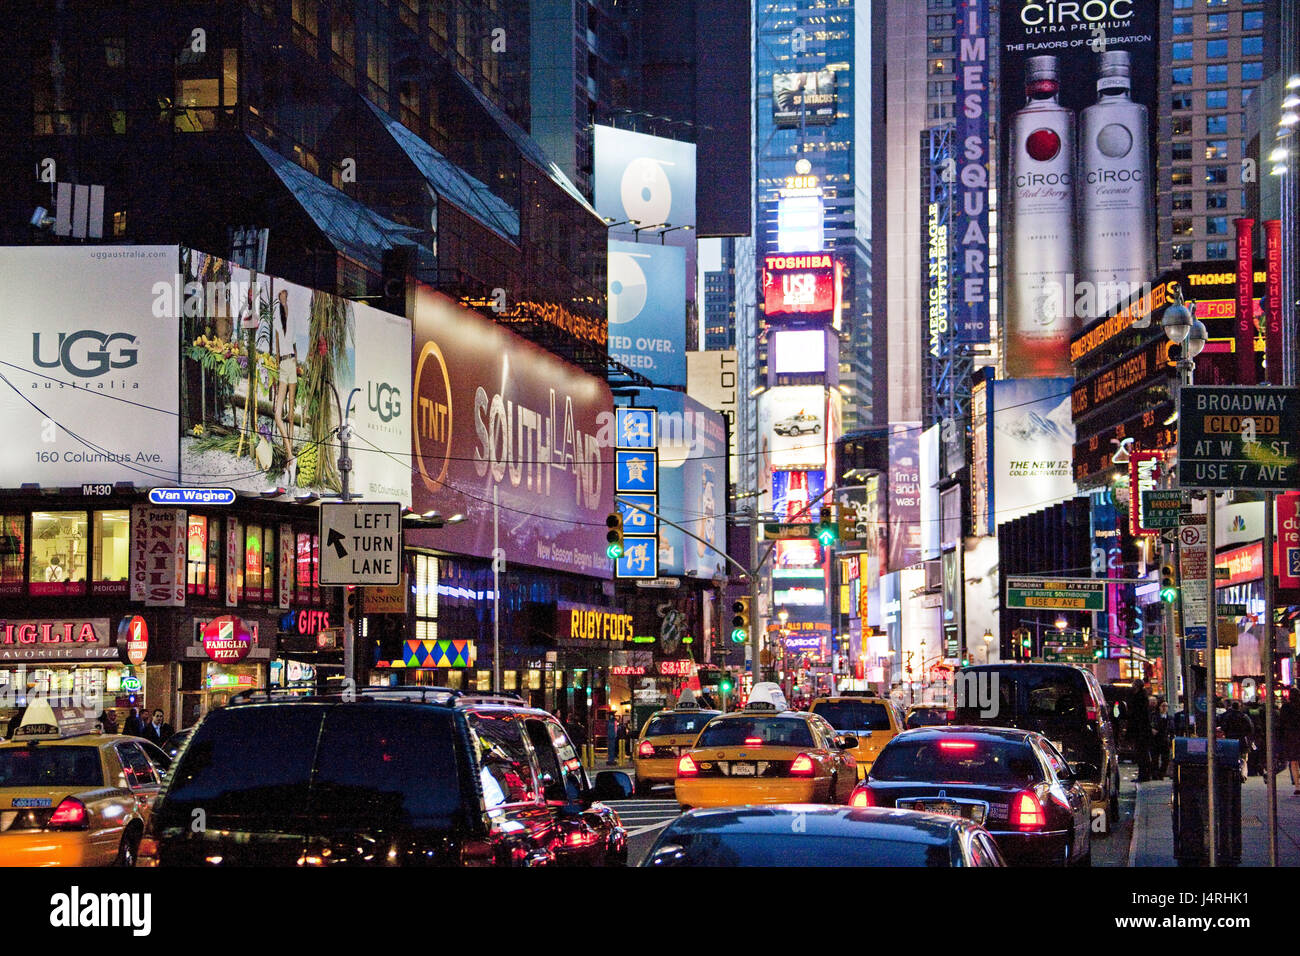 The USA, New York city, Times Square, Broadway, street scene, Stock Photo